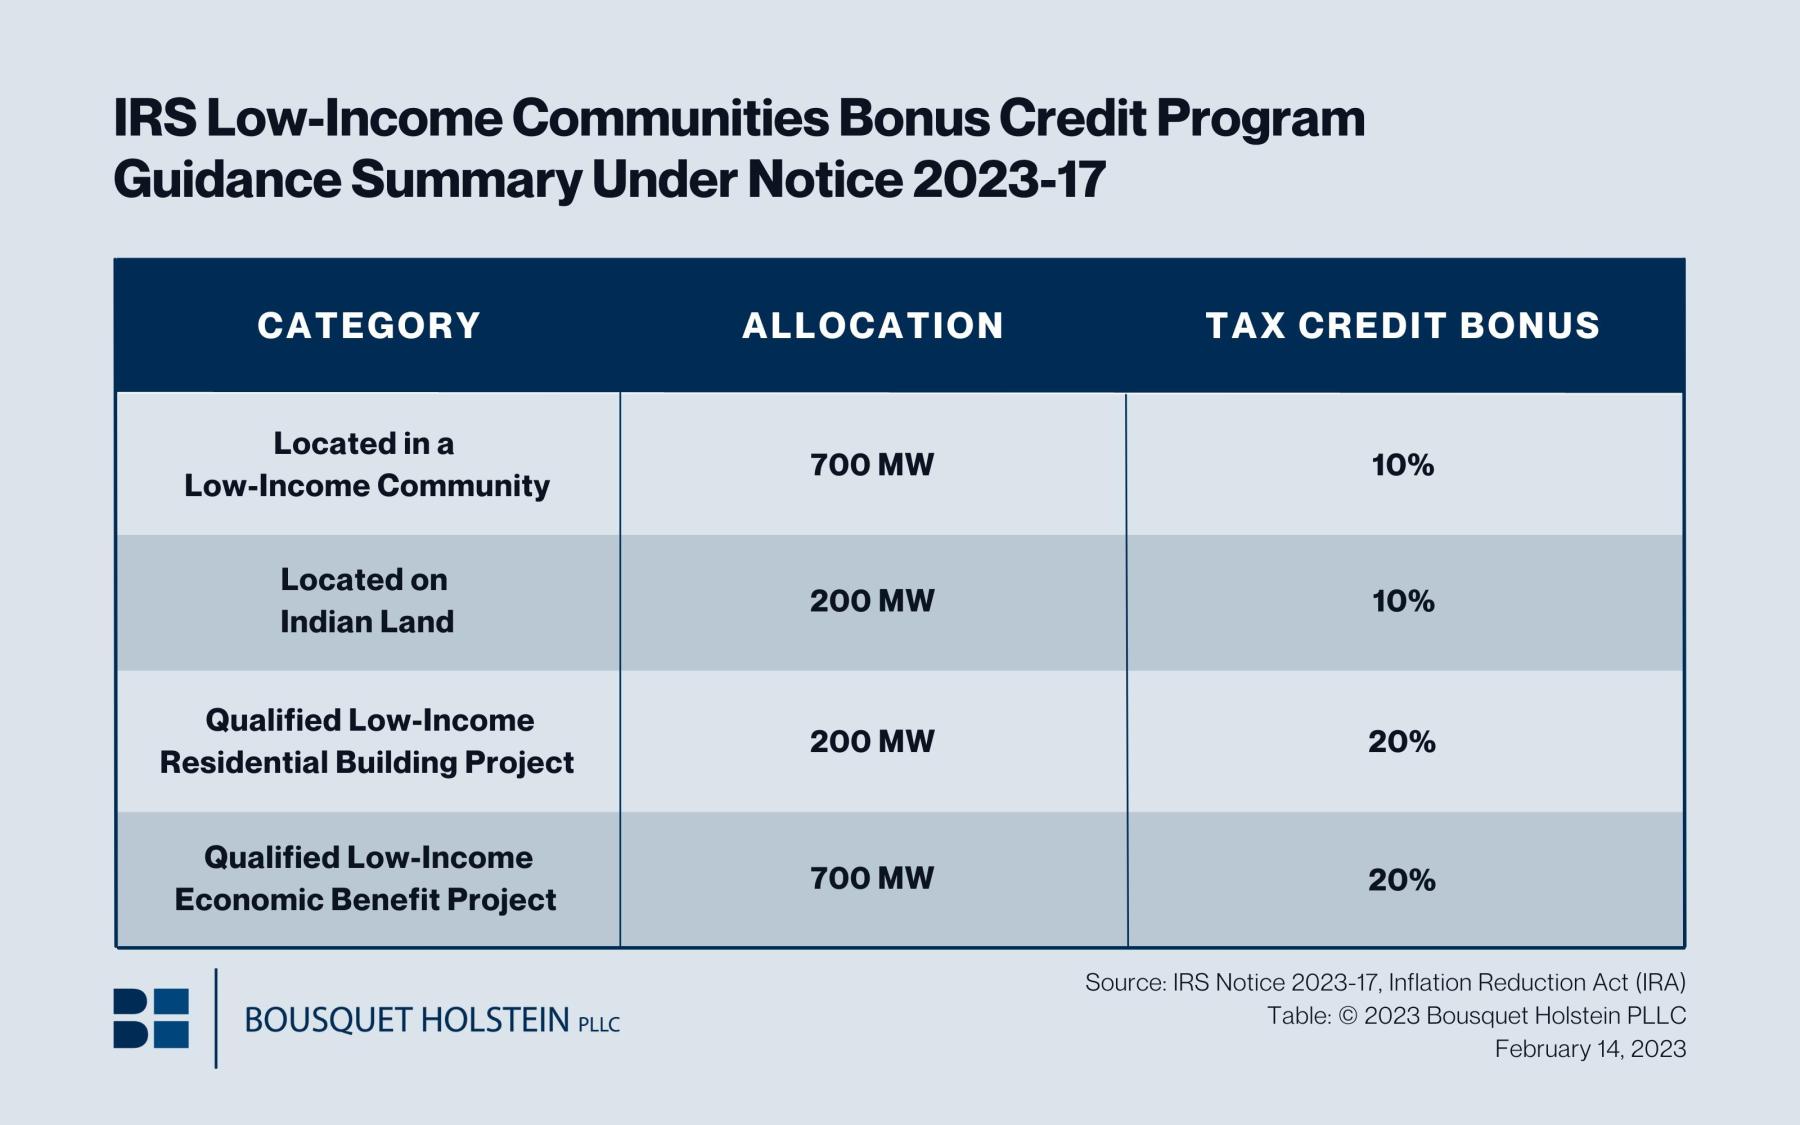 Data table explains IRS Notice 2023-17 guidance for Low-Income Communities Bonus Credit Program courtesy of Bousquet Holstein. 